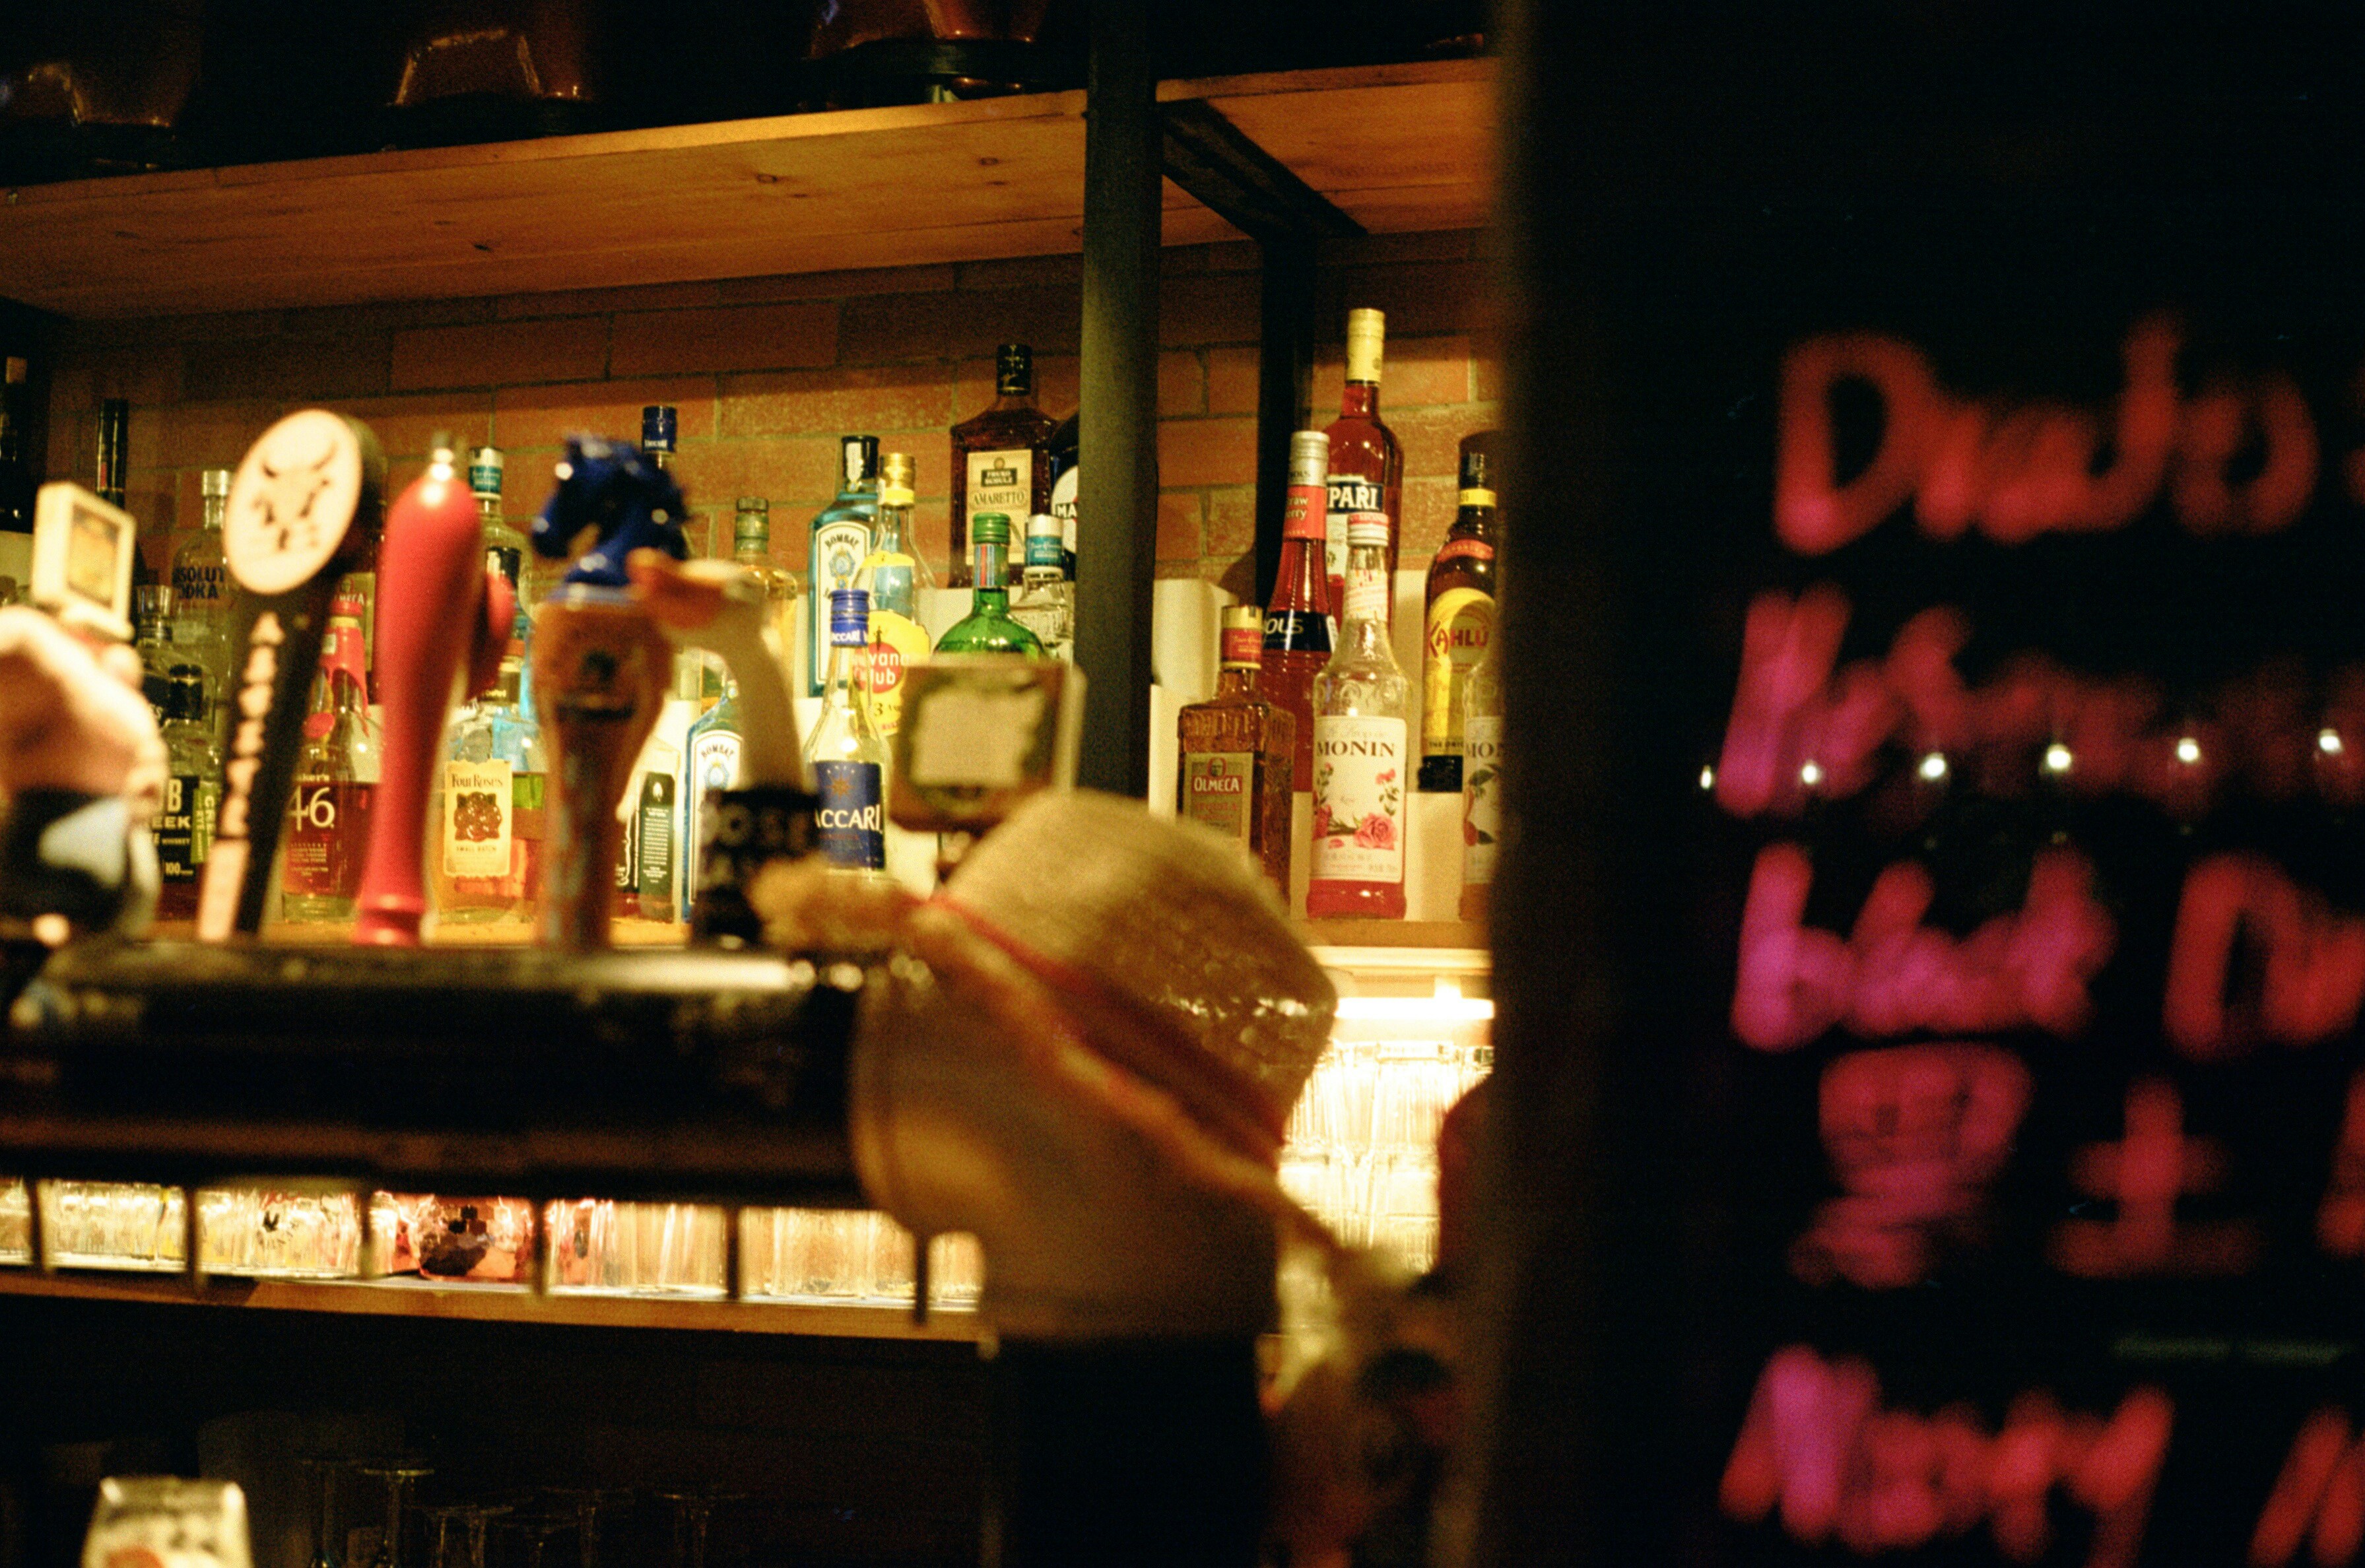 Inside the bar Iron Pig, by Kodak Colorplus 200